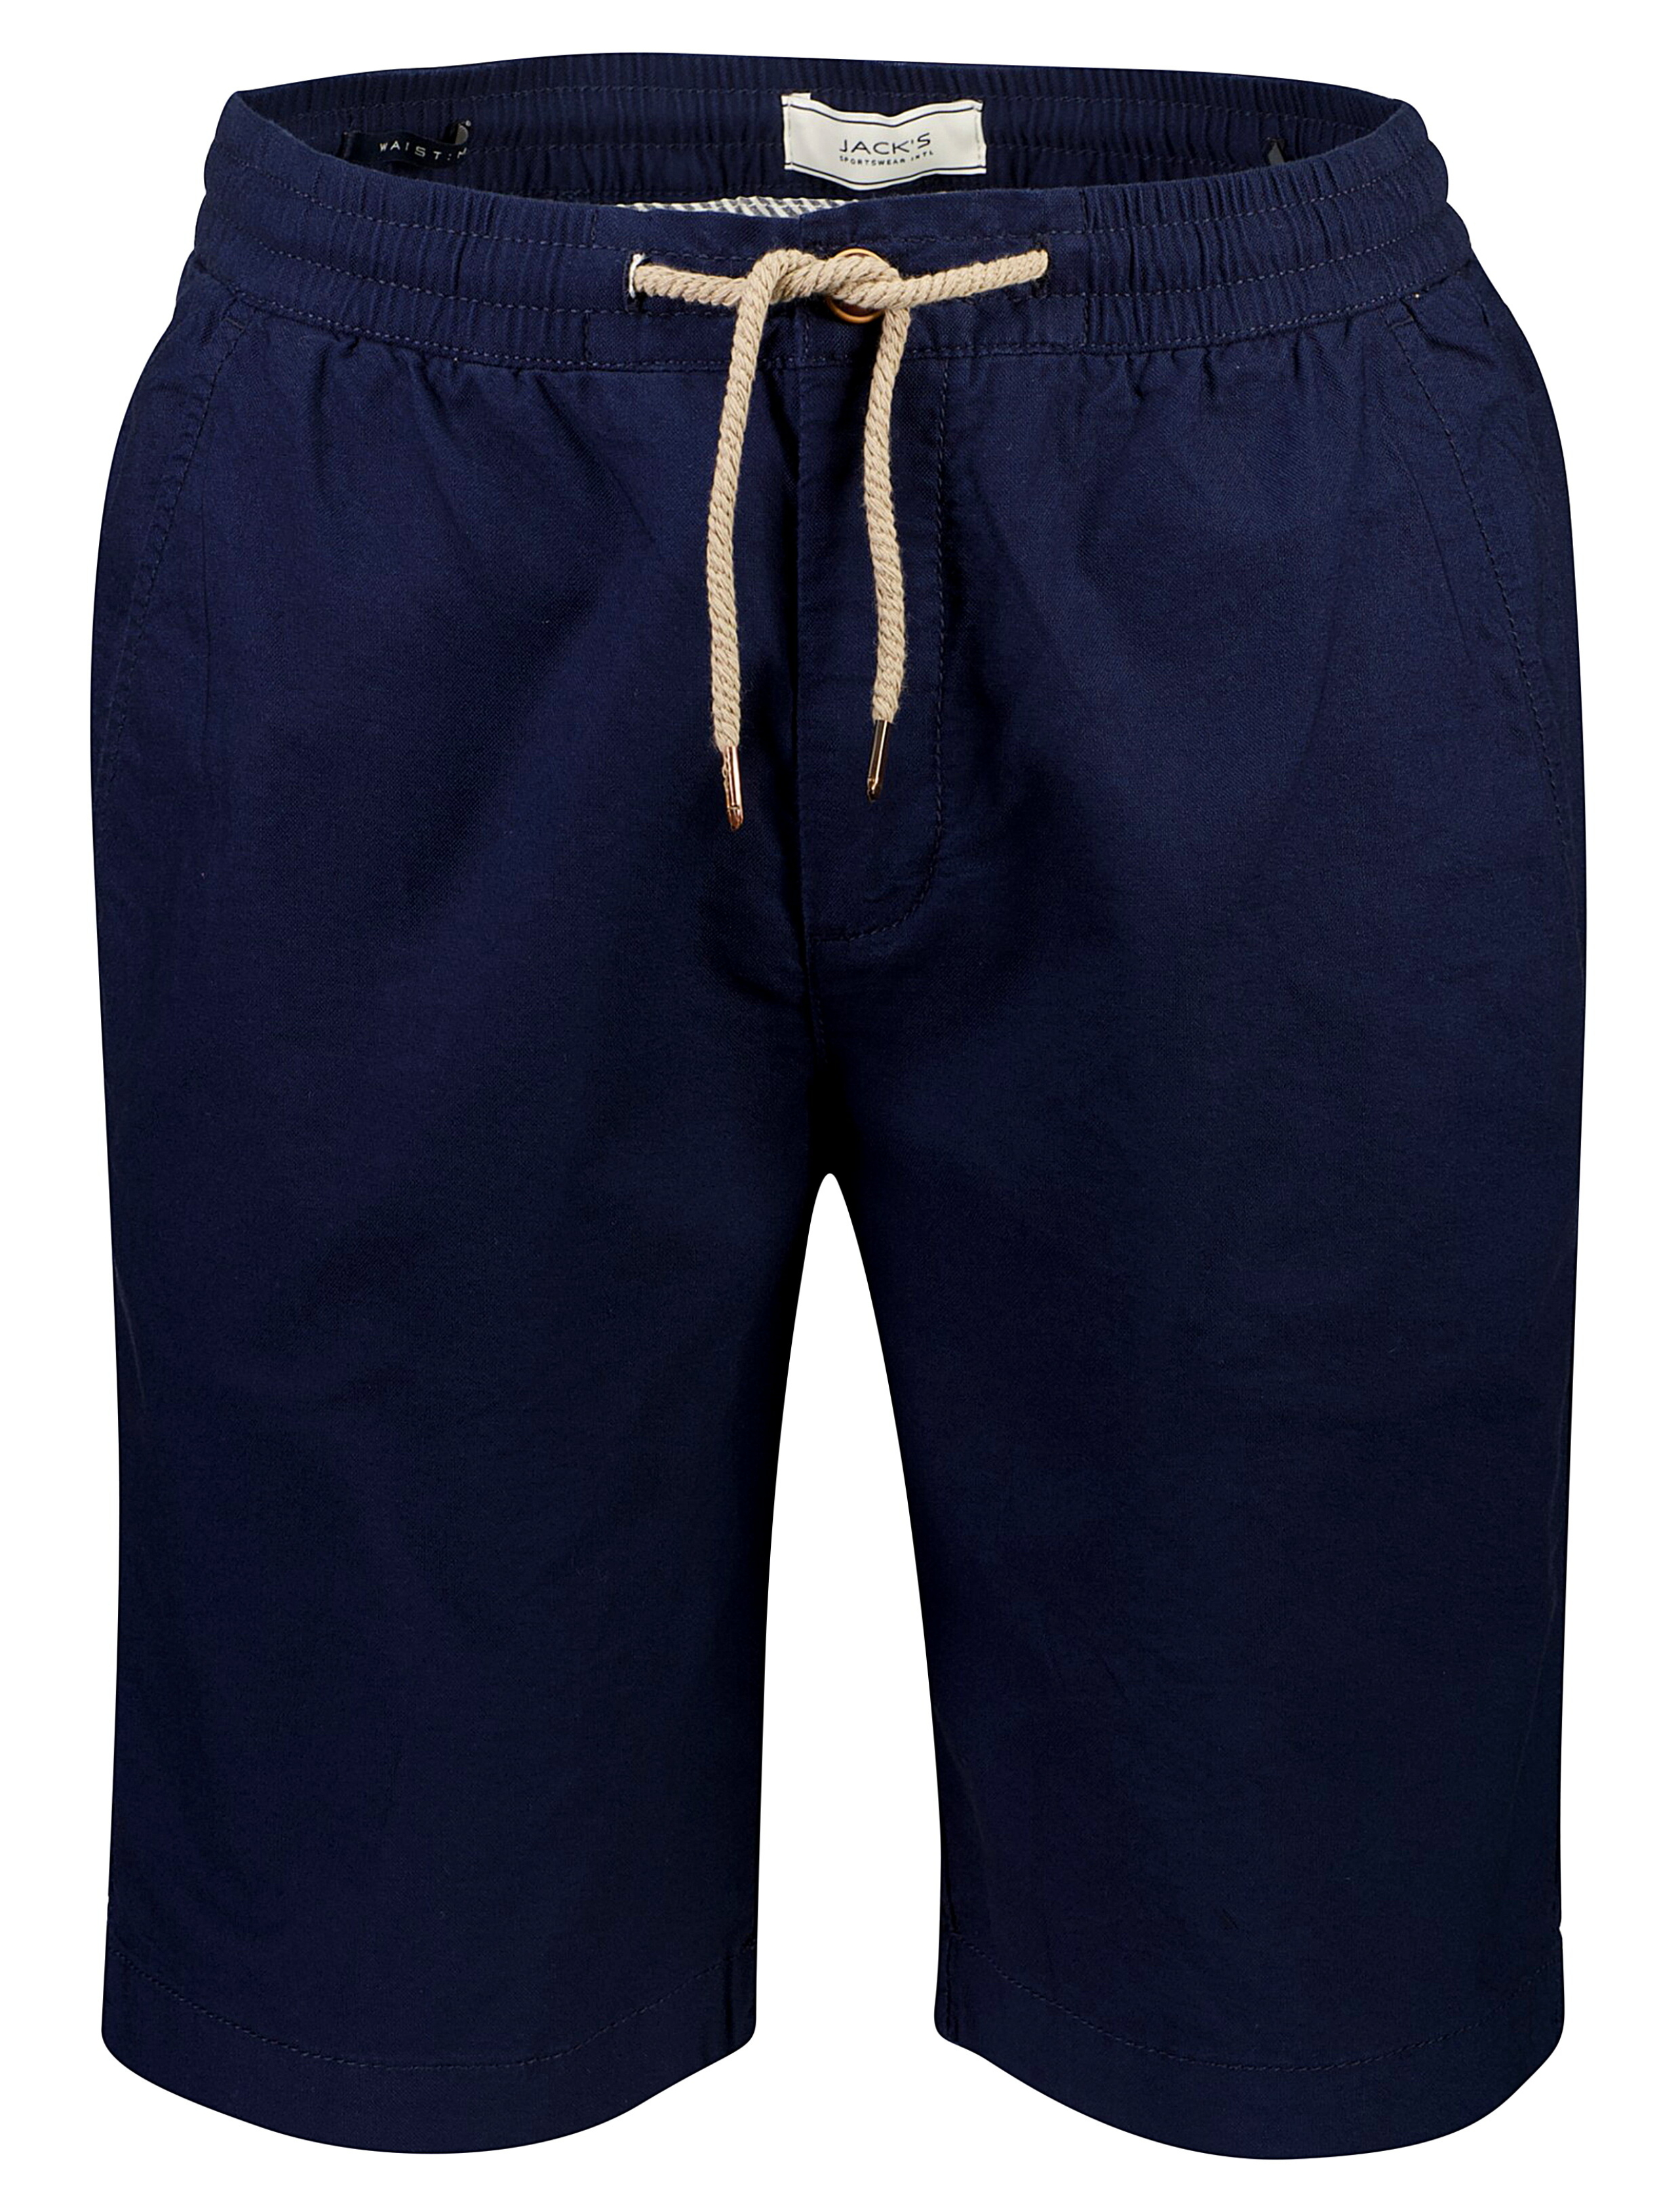 Jack's Casual shorts blå / navy